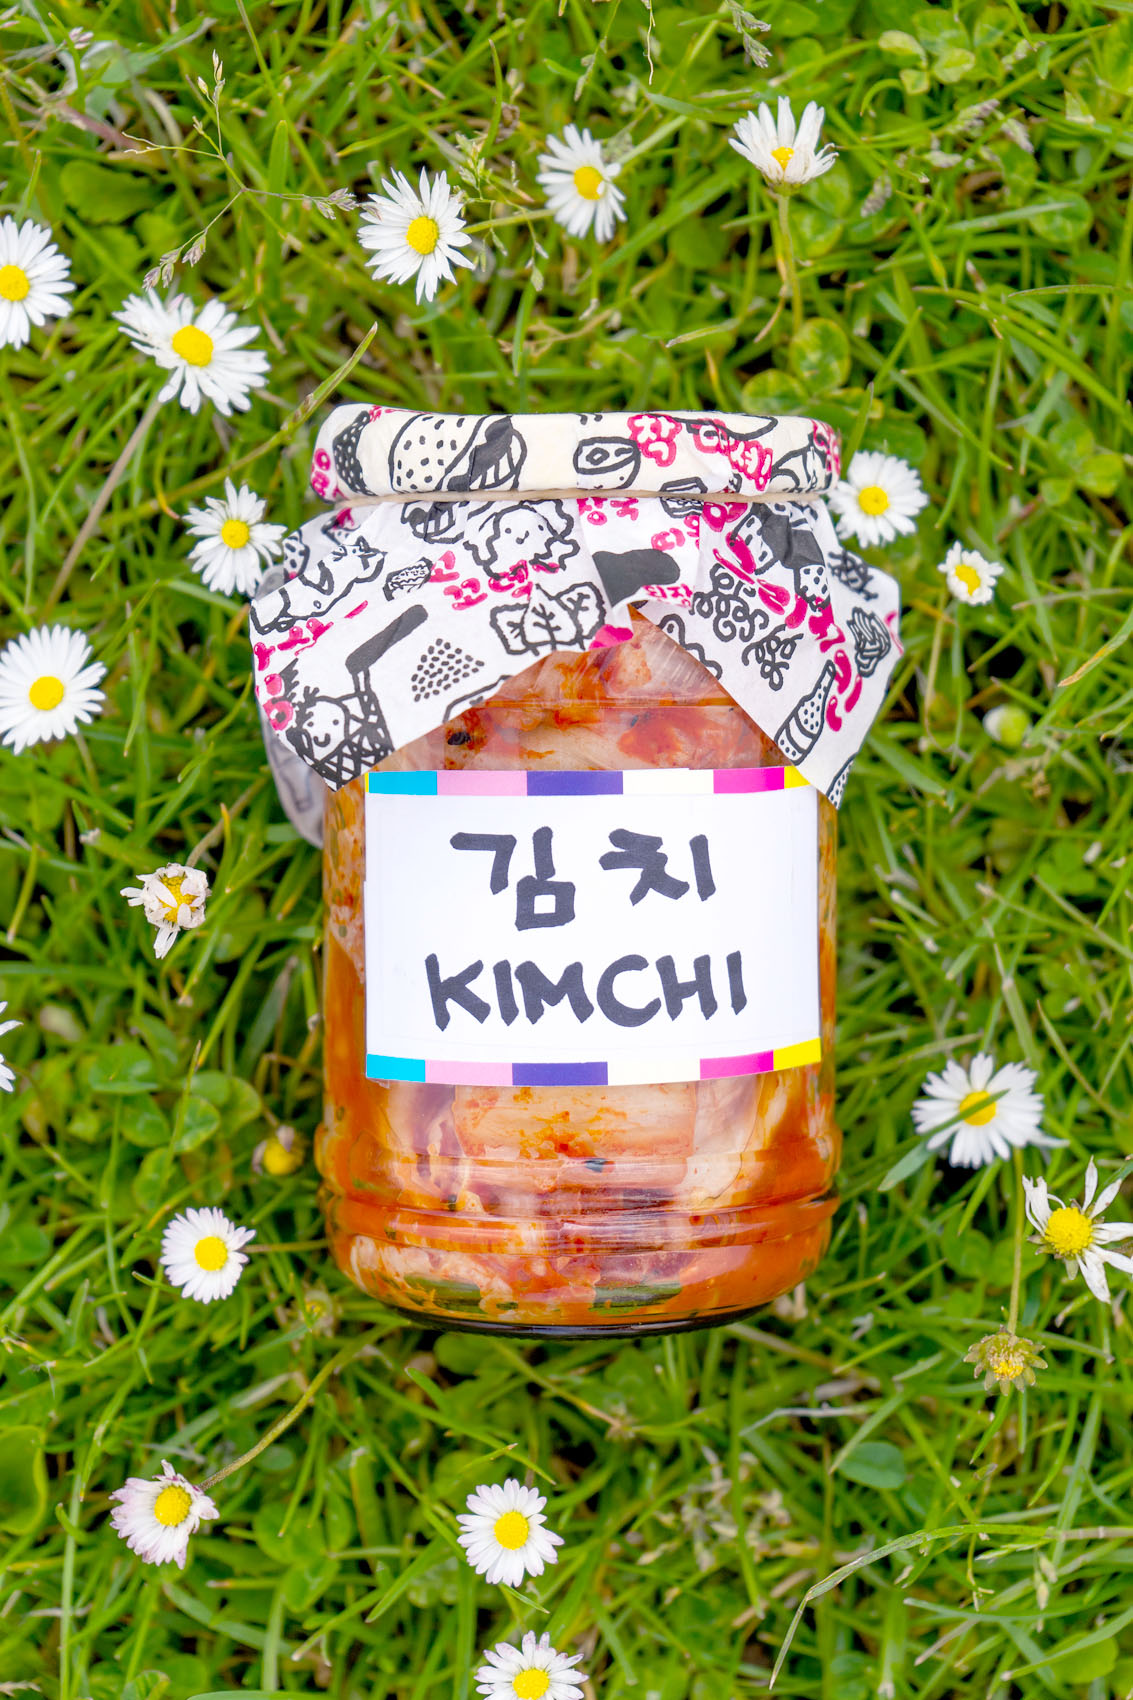 Kimchi Princess Kimchi